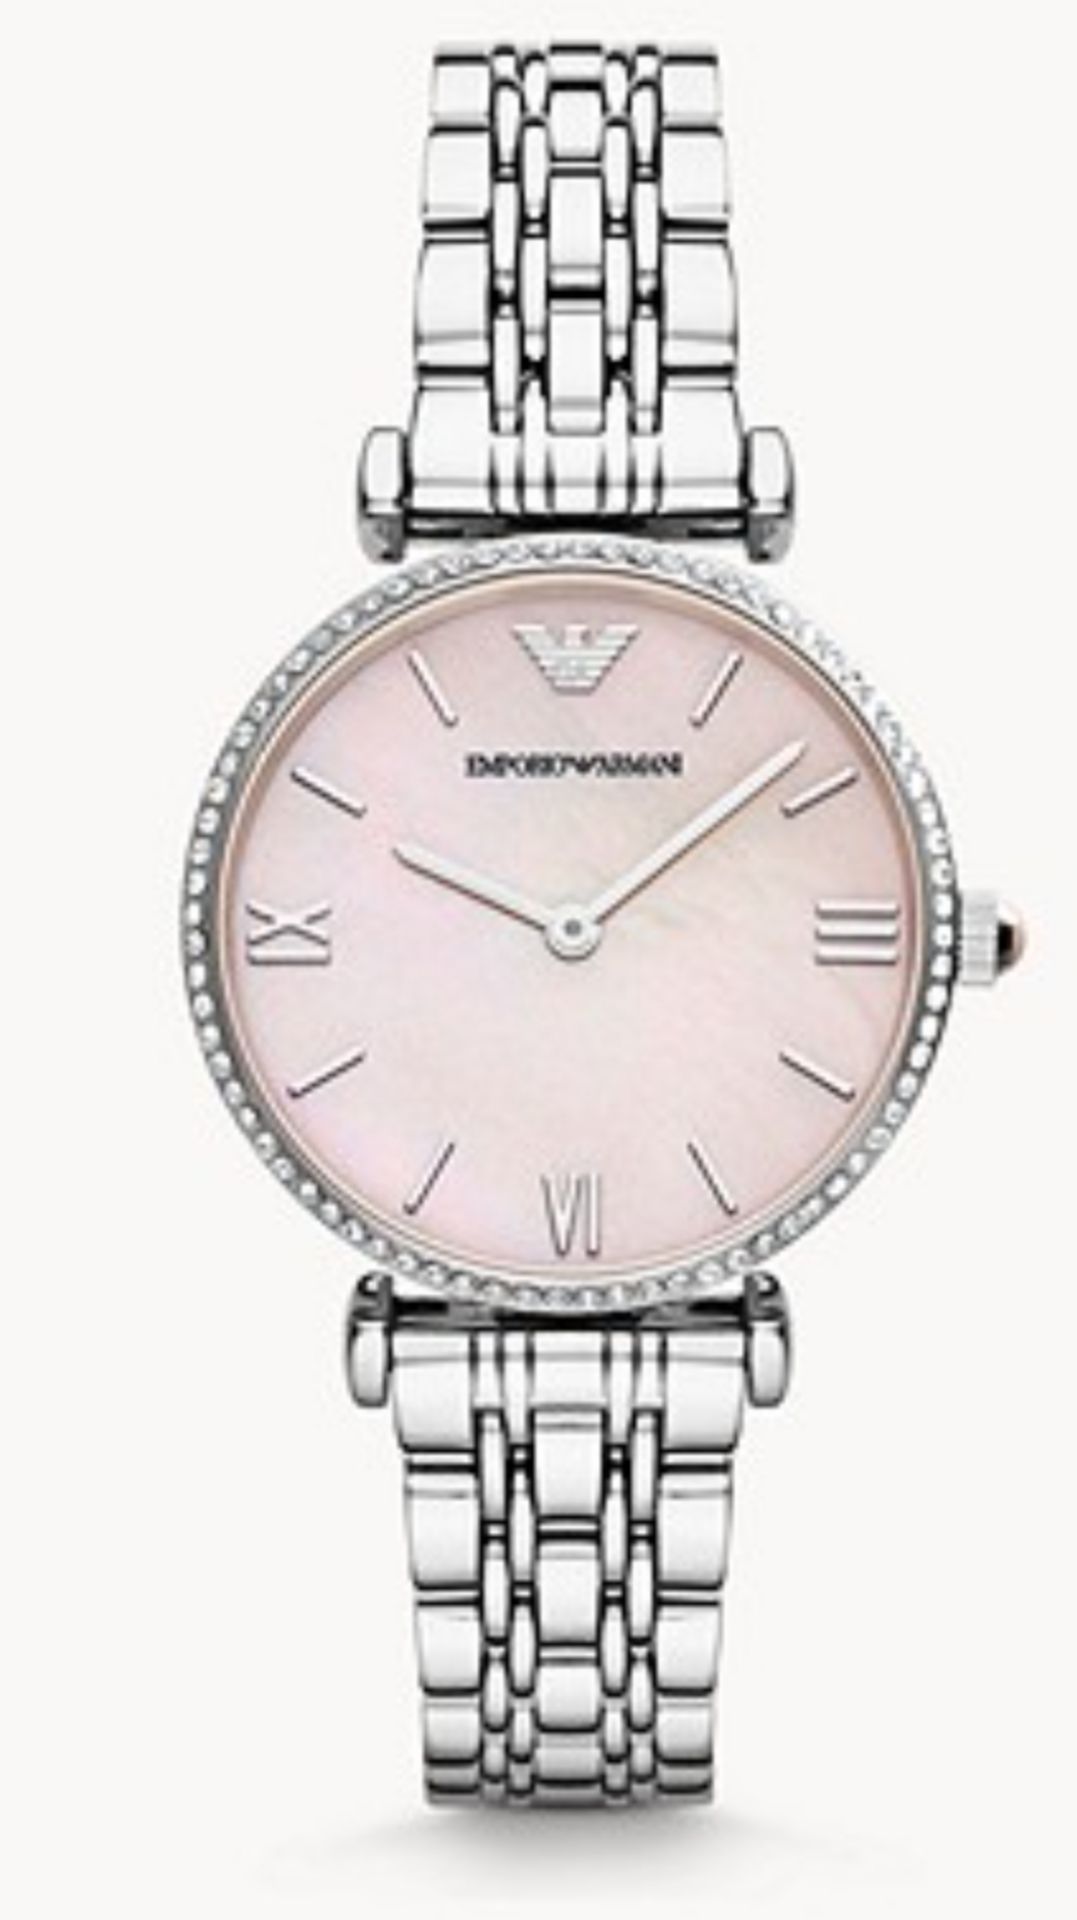 Emporio Armani AR1779 Ladies Gianni T-Bar Silver Bracelet Watch